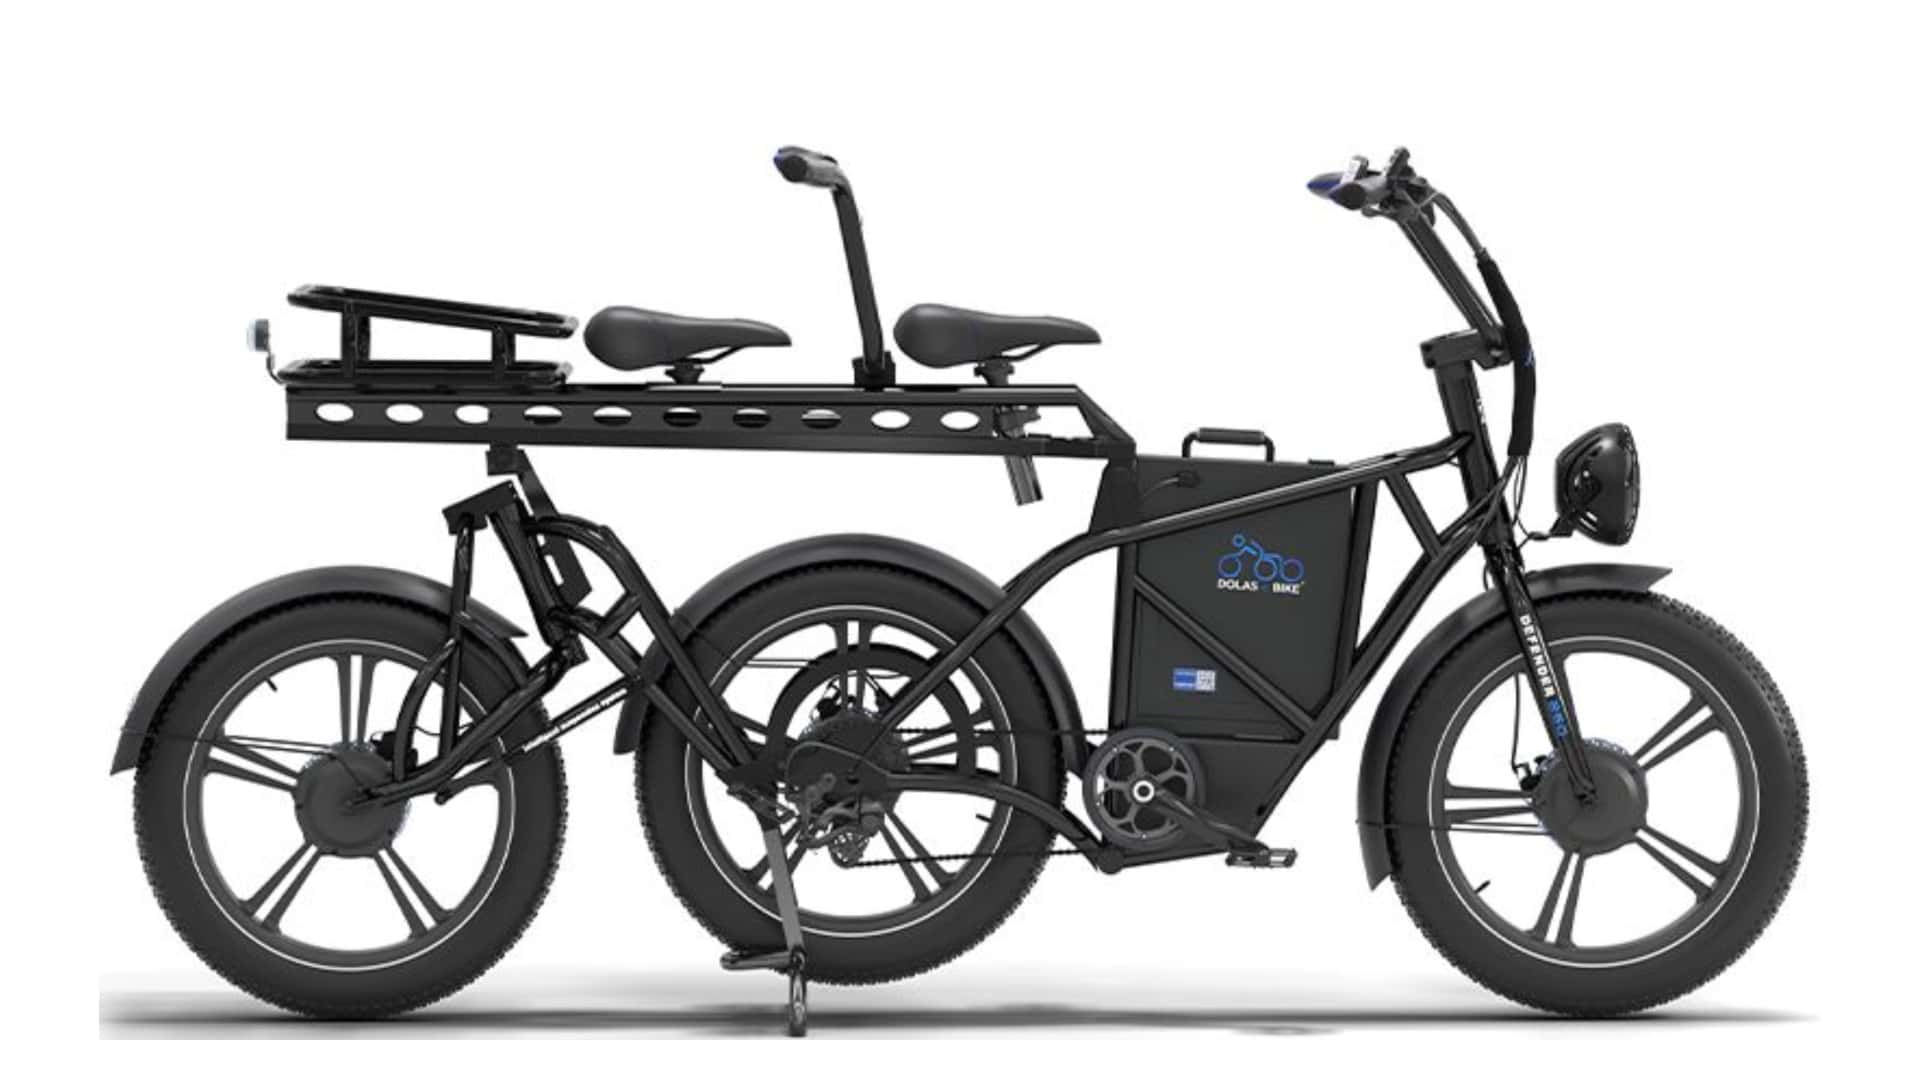 Dolas Defender 250 three-wheeled e-bike with a 250W hub motor on each ...